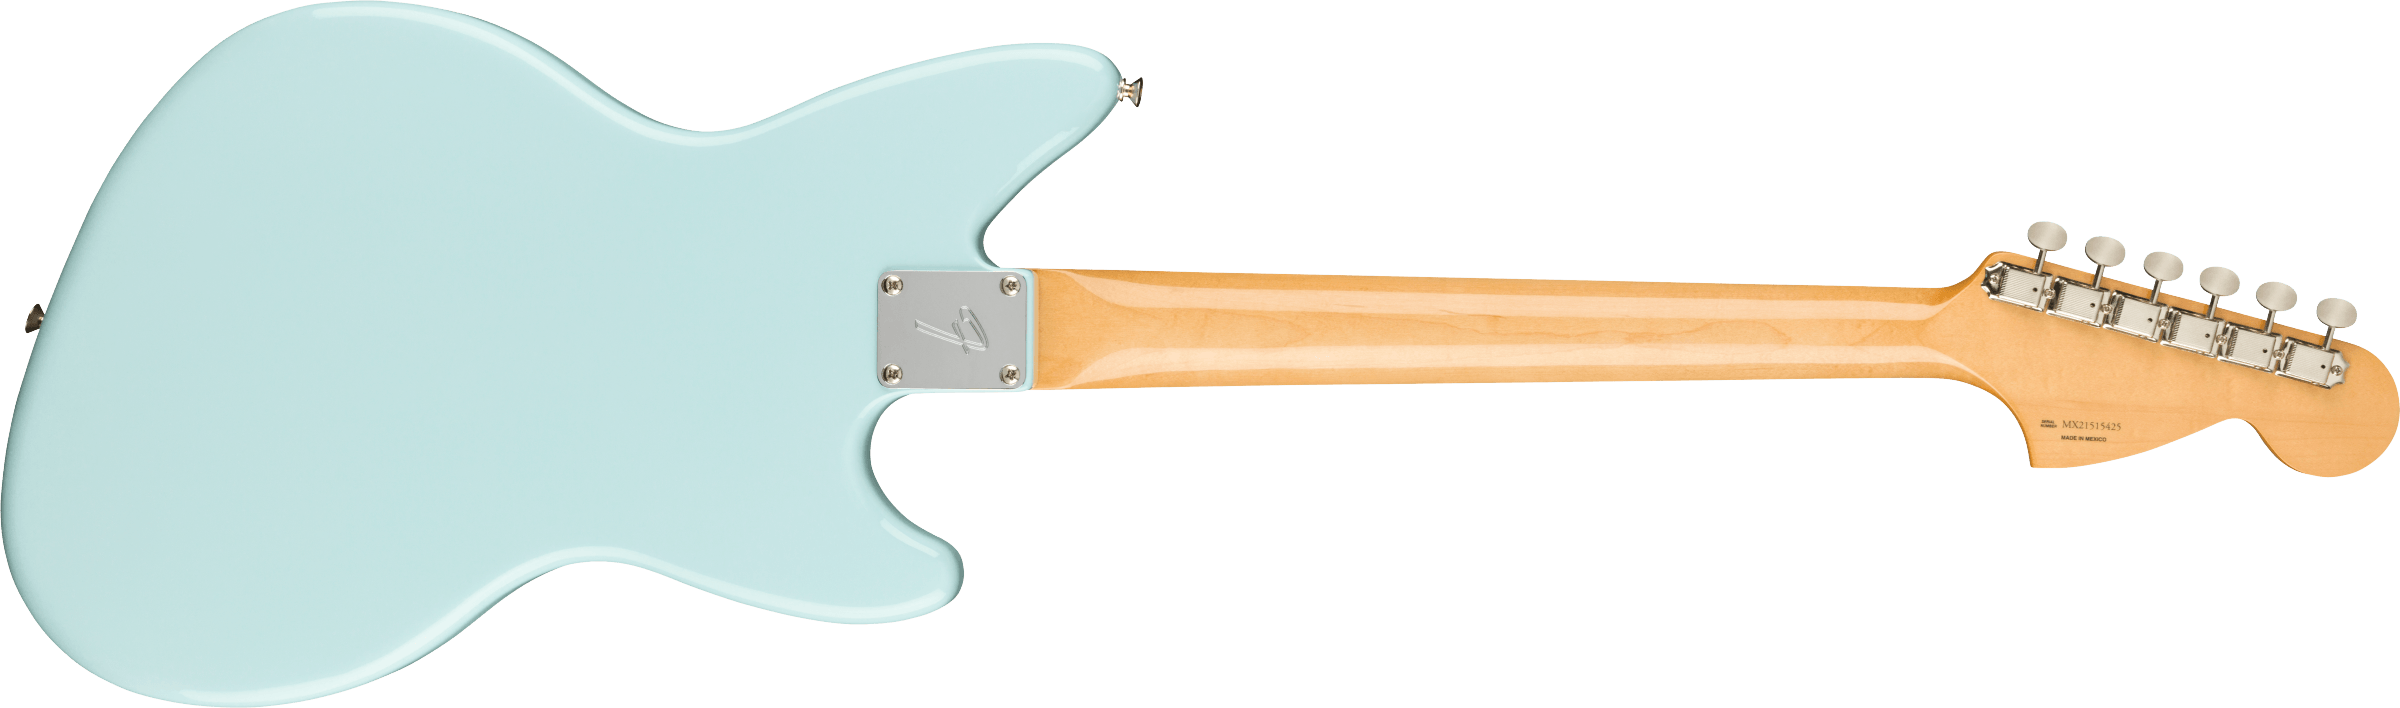 Fender Jag-stang Kurt Cobain Artist Gaucher Hs Trem Rw - Sonic Blue - E-Gitarre für Linkshänder - Variation 1